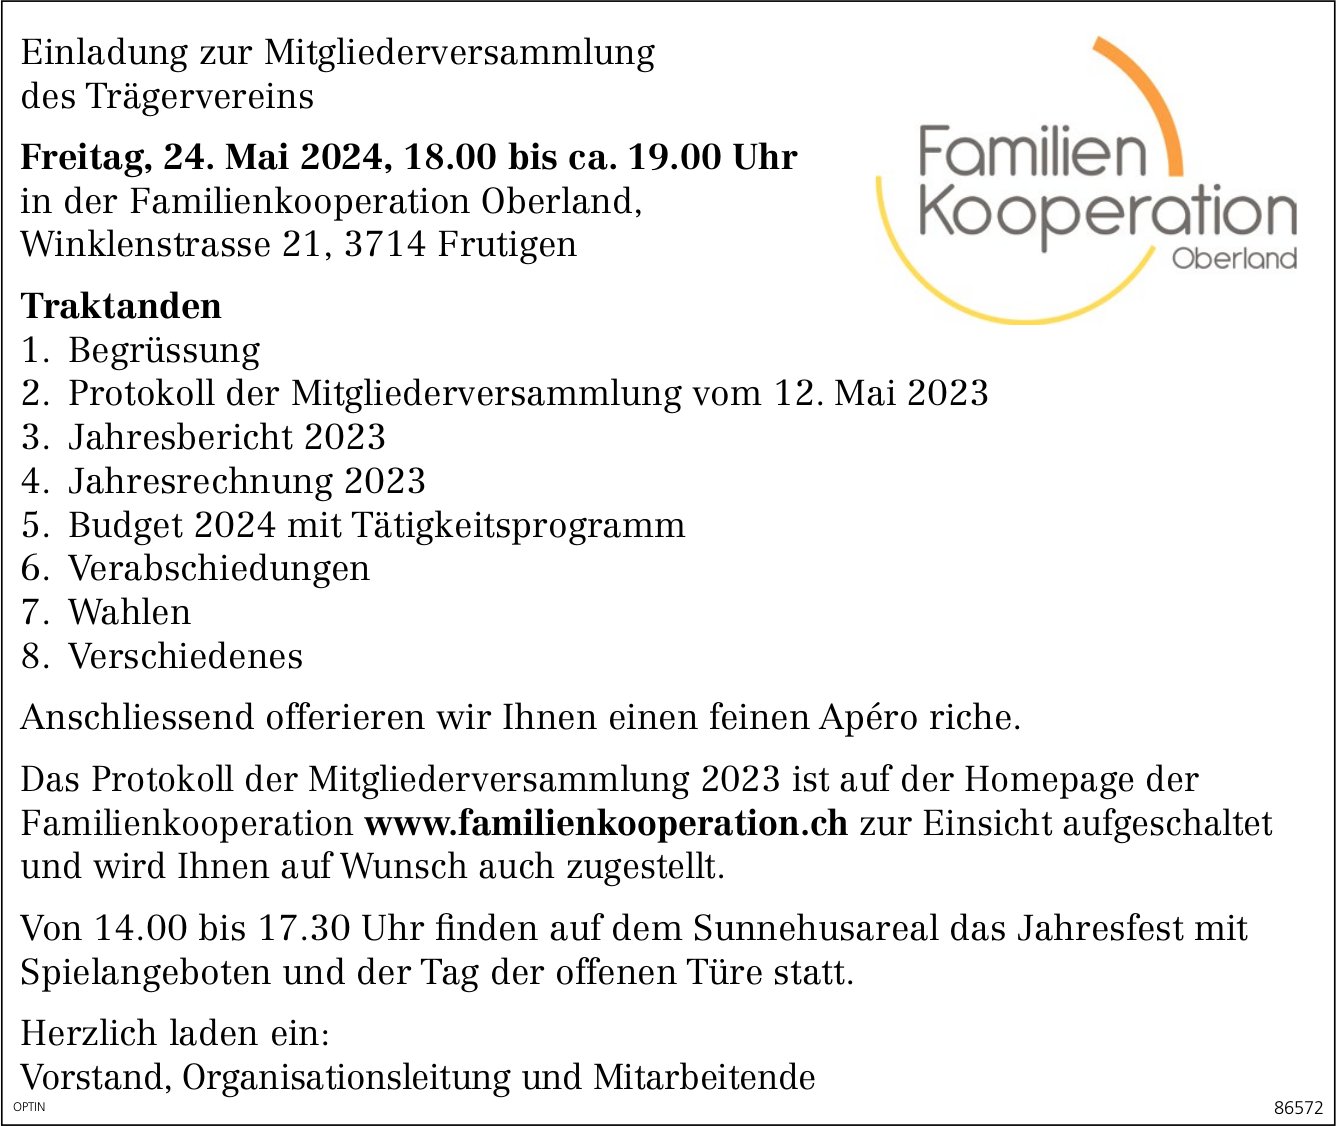 Mitgliederversammlung Trägerverein, 24. Mai, Familien Kooperation Oberland, Frutigen